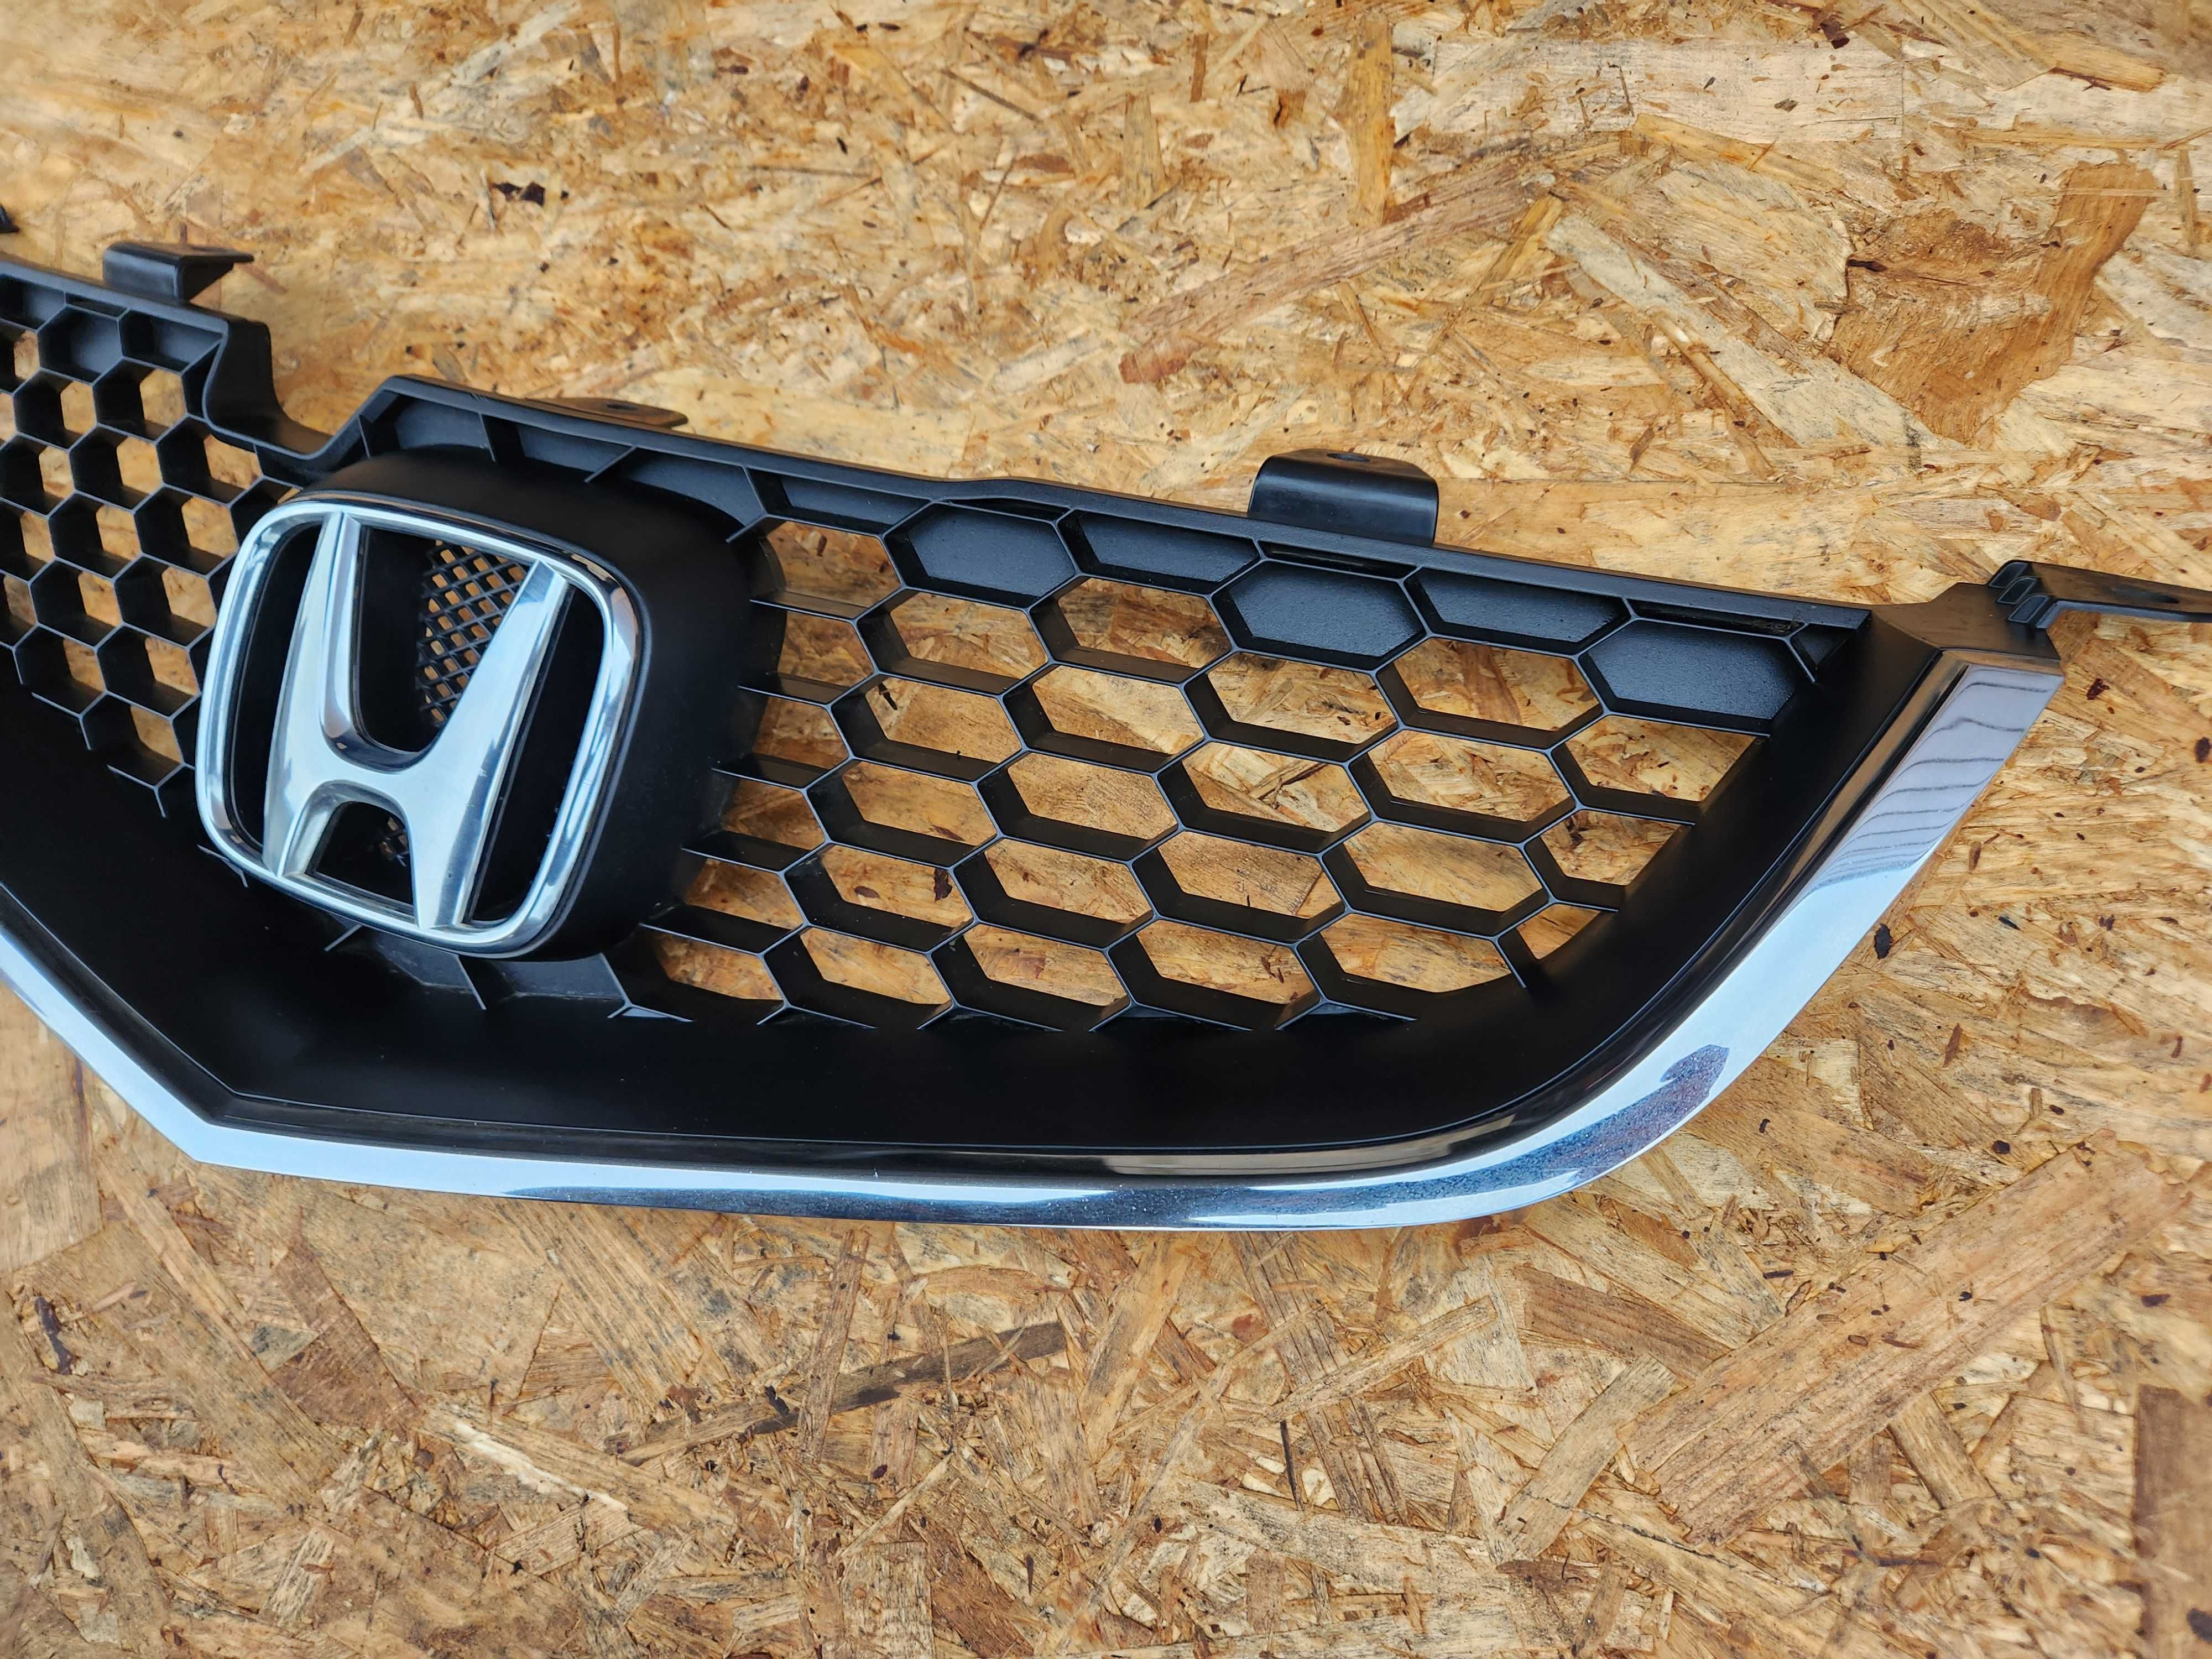 Honda Accord VII 7 grill atrapa TYPE-S sport types plaster miodu